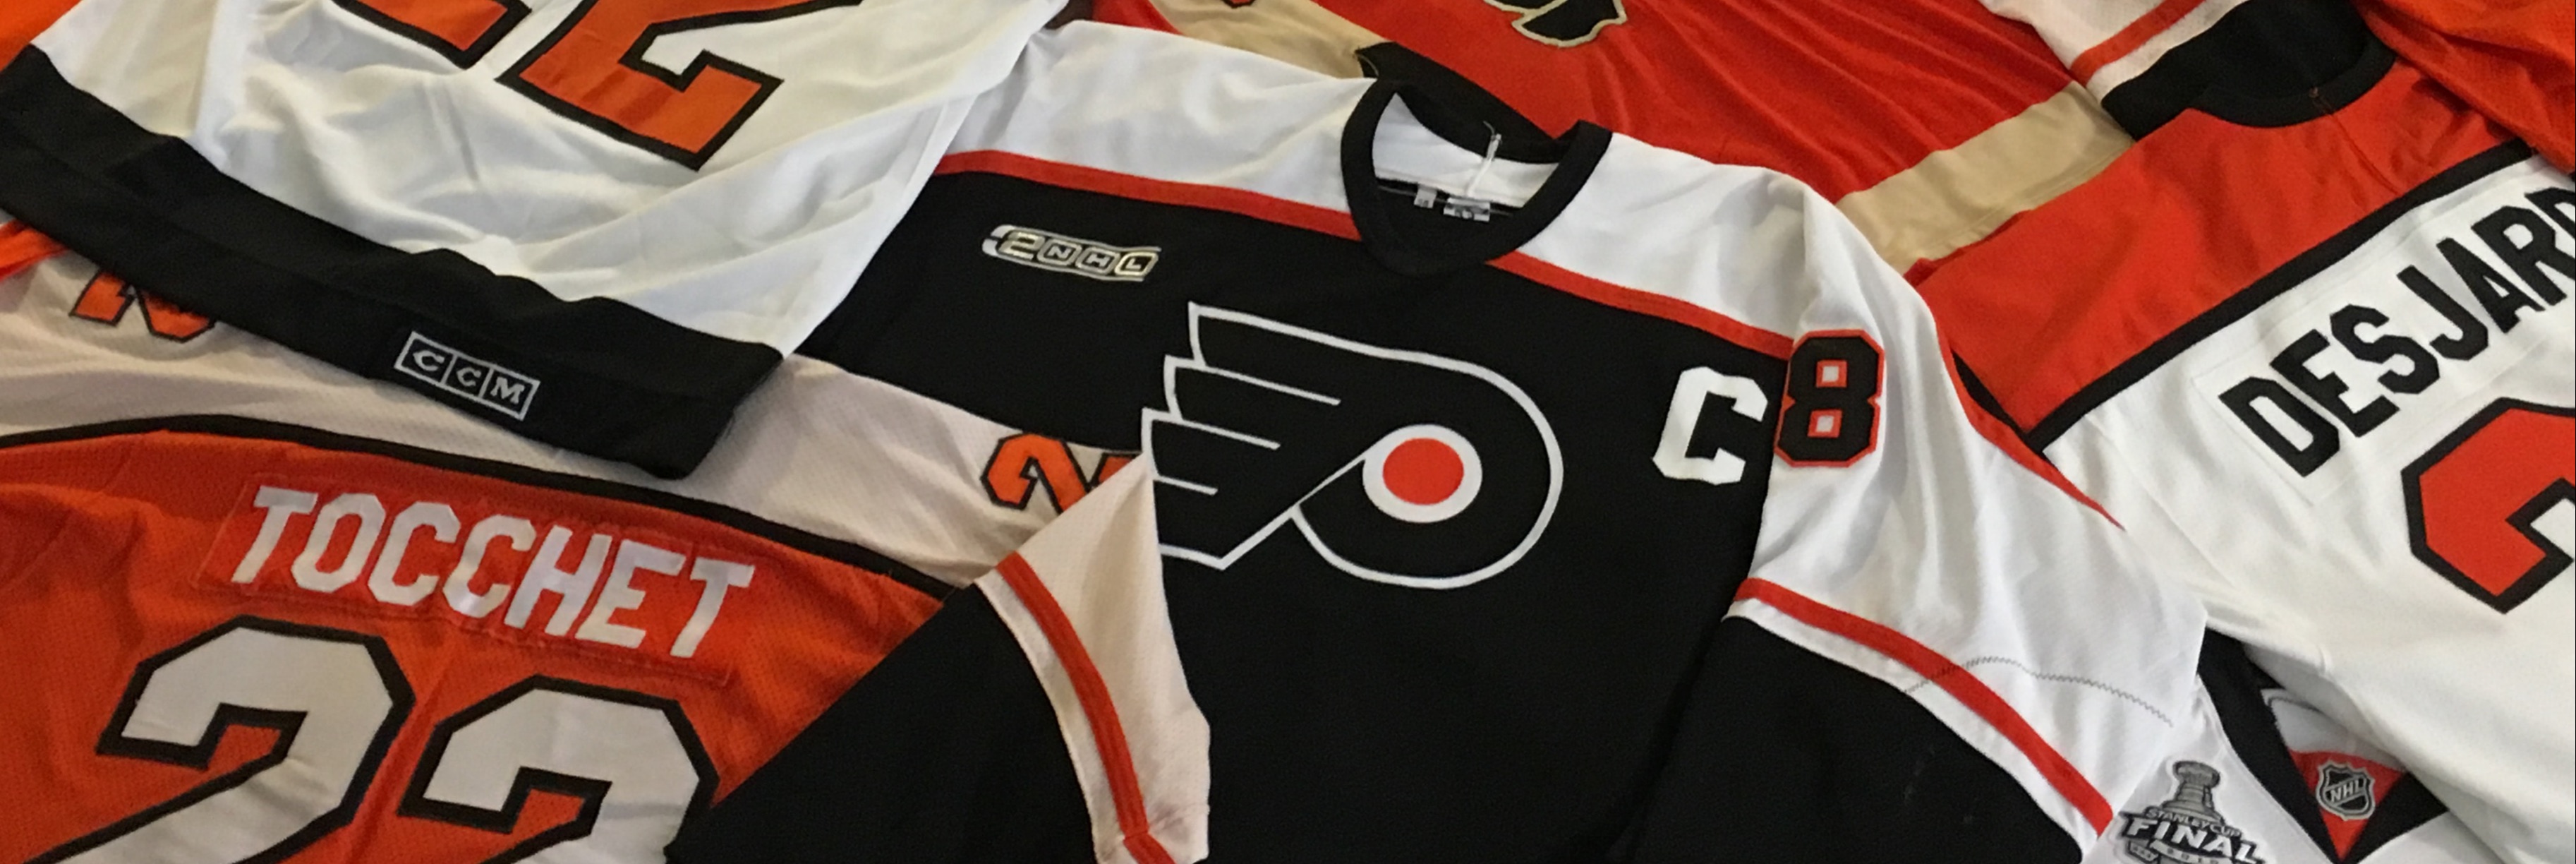 1998 Eric Lindros Philadelphia Flyers Orange CCM NHL Hockey Jersey Size XXL